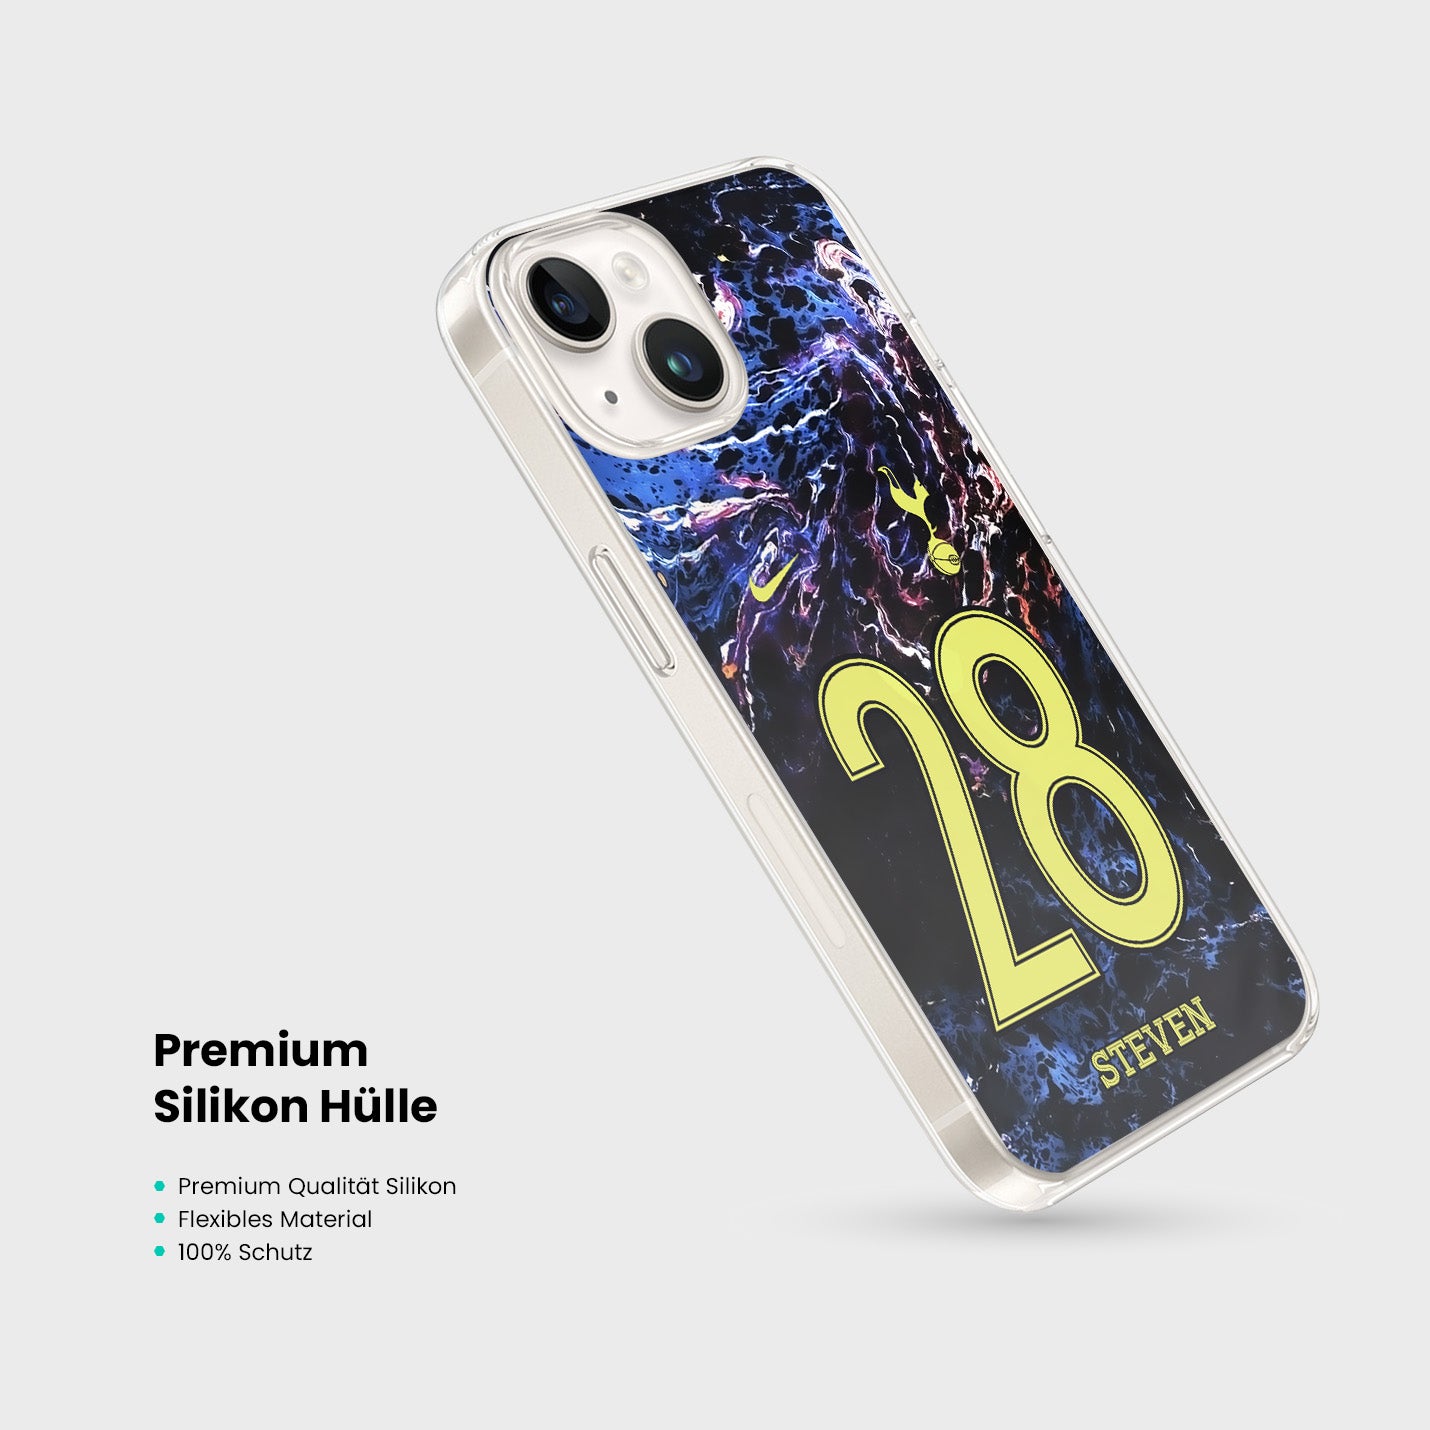 Personalisierte Tottenham Hotspur Handyhülle - 1instaphone